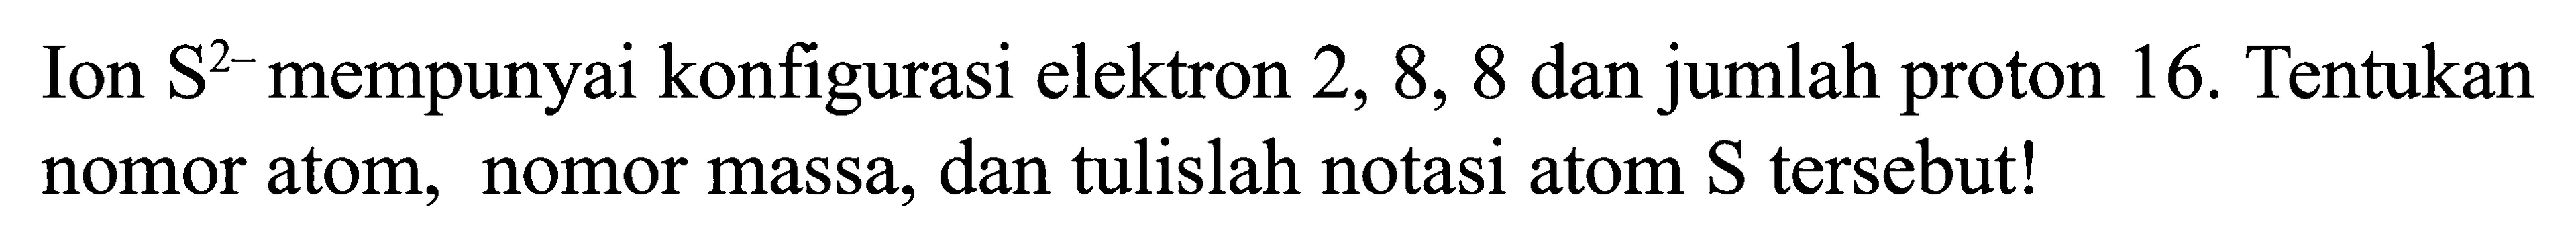 Ion S^(2-) mempunyai konfigurasi elektron 2, 8, 8 dan jumlah proton 16. Tentukan nomor atom, nomor massa, dan tulislah notasi atom S tersebut!